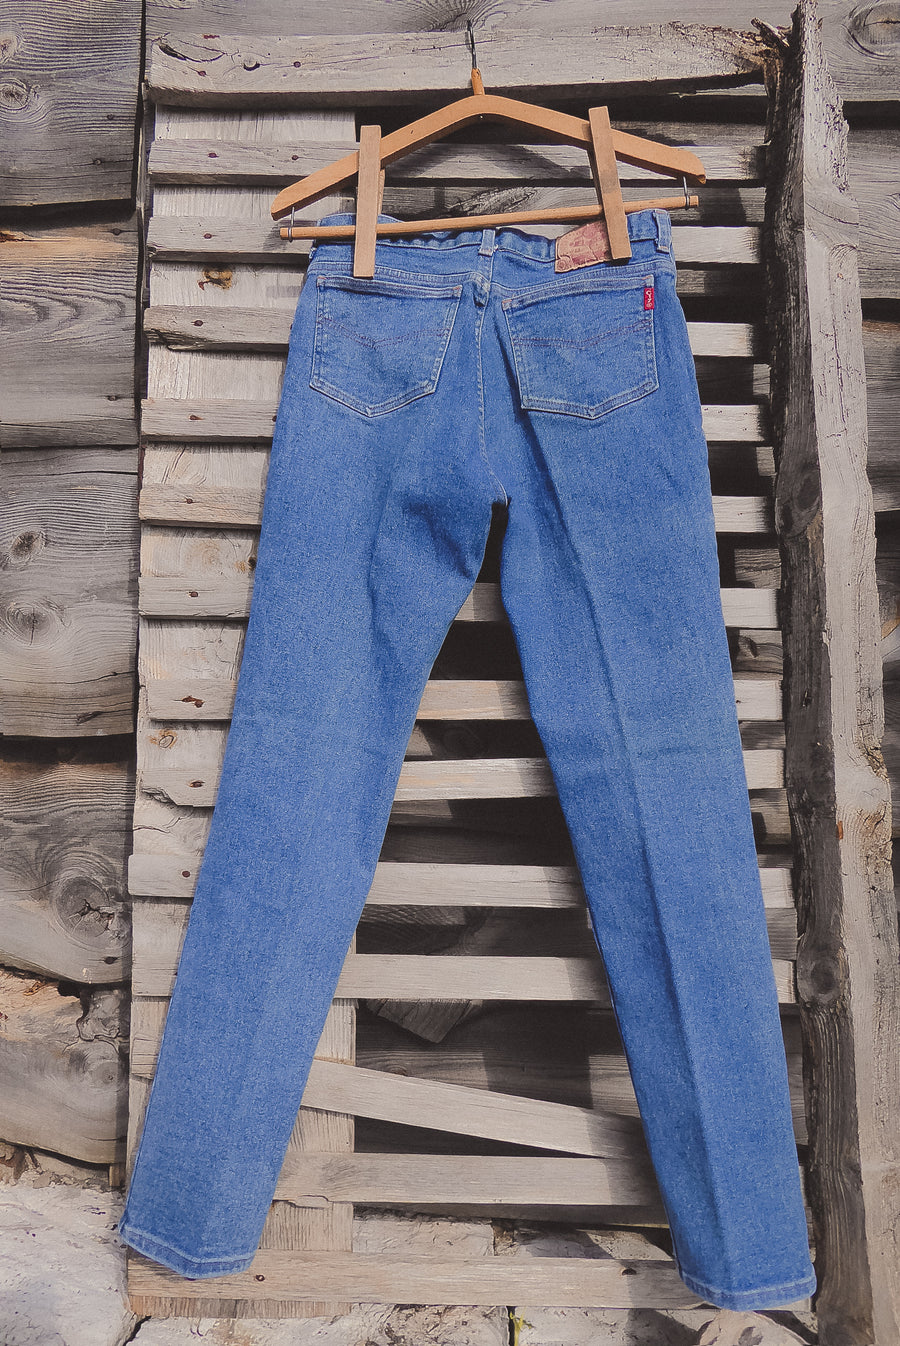 C17 vintage jeans